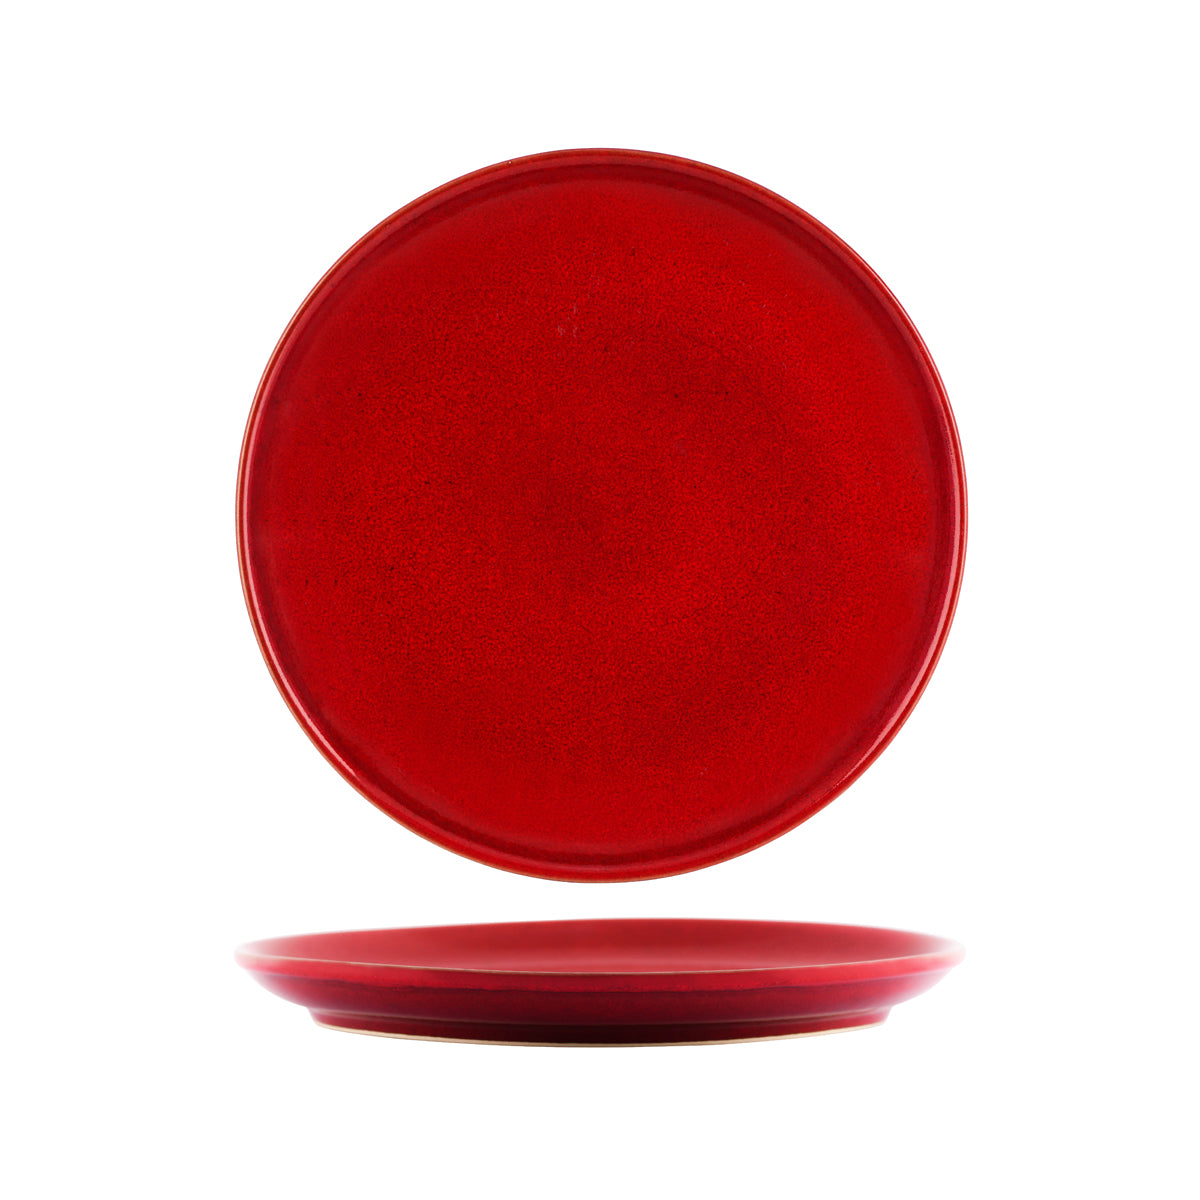 98229 Tablekraft Artistica Reactive Red Round Plate 276mm Tomkin Australia Hospitality Supplies